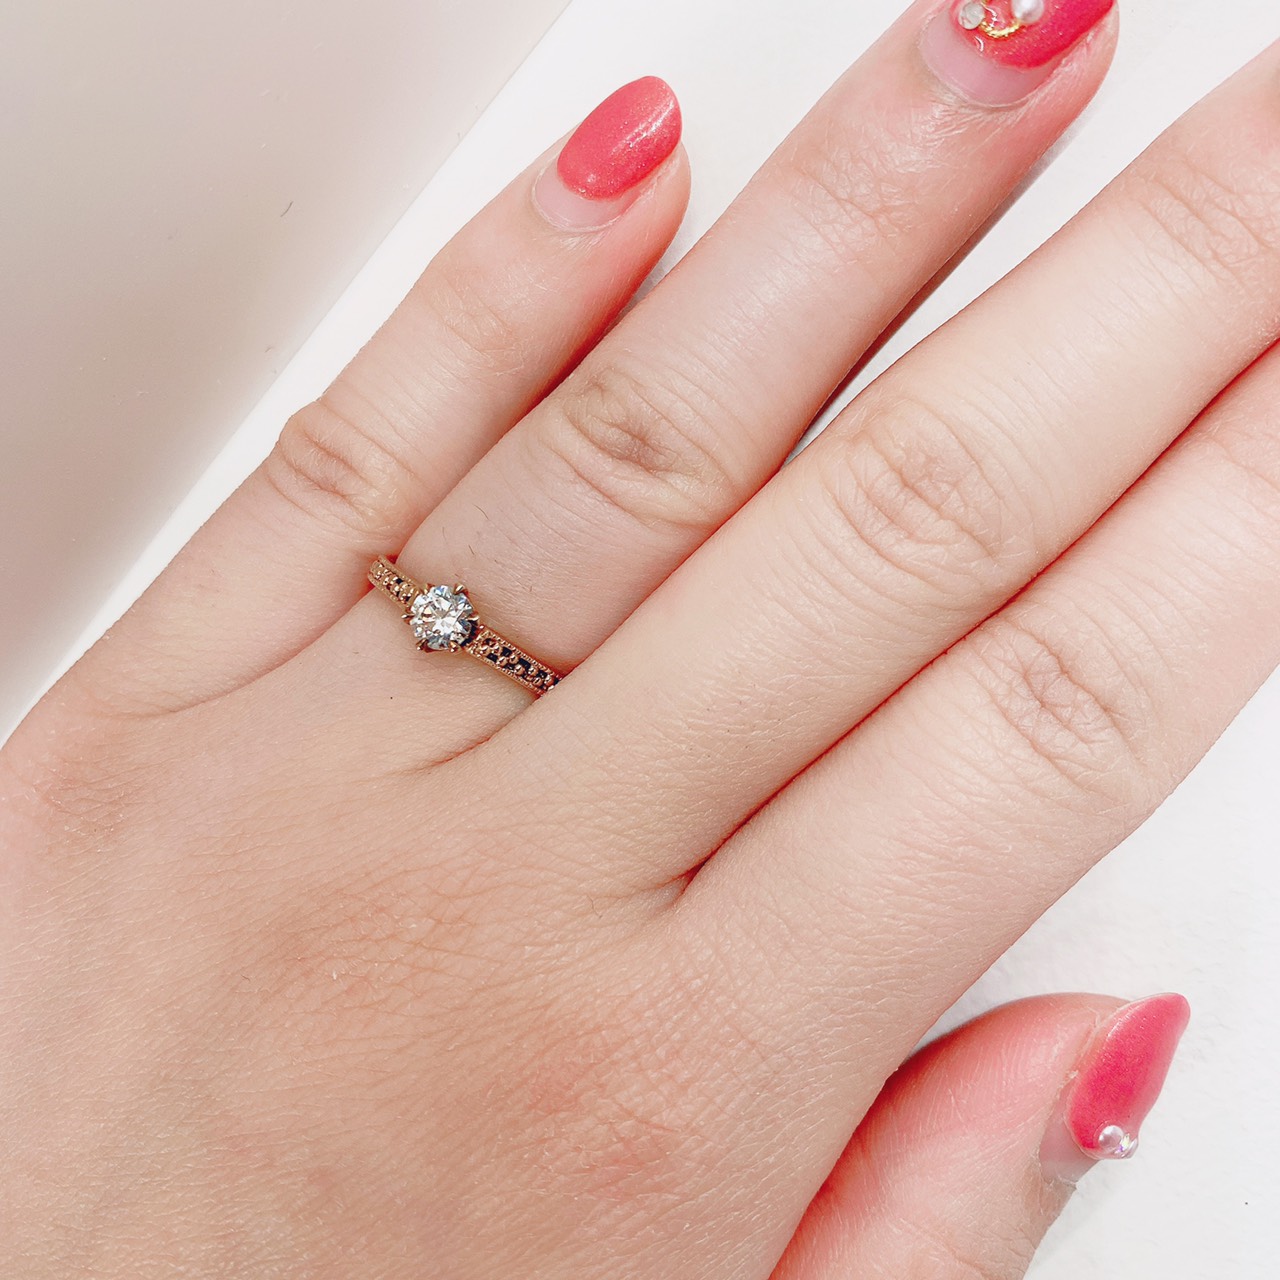 BROOCH 婚約指輪 エンゲージリング ピンクゴールドダイヤモンド1石タイプ｜新潟で婚約指輪・結婚指輪BROOCH